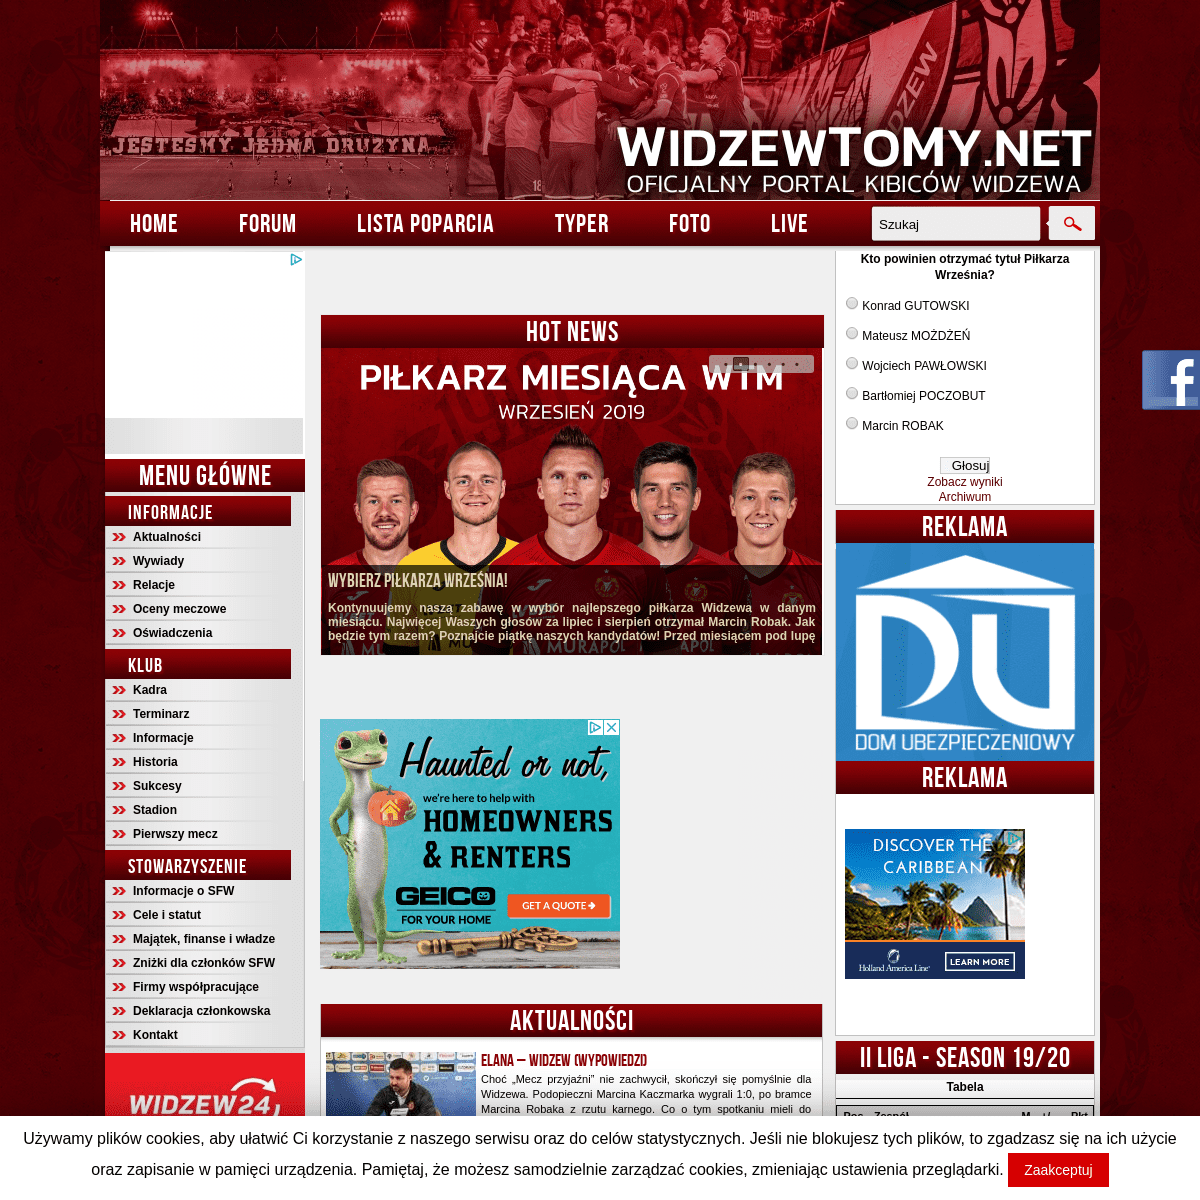 A complete backup of widzewtomy.net